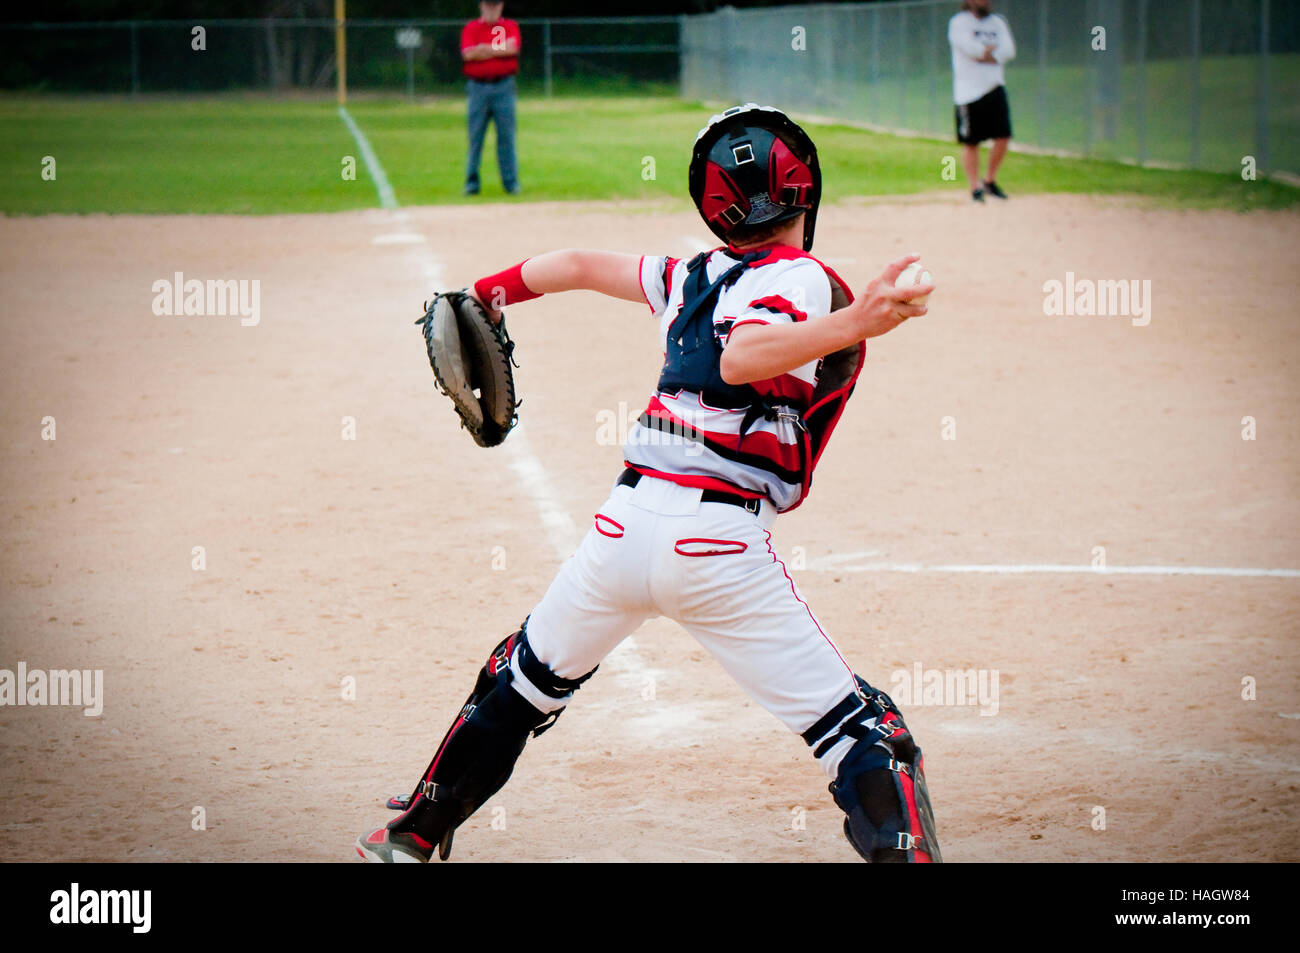 American baseball catcher throwing ball. Stock Photo